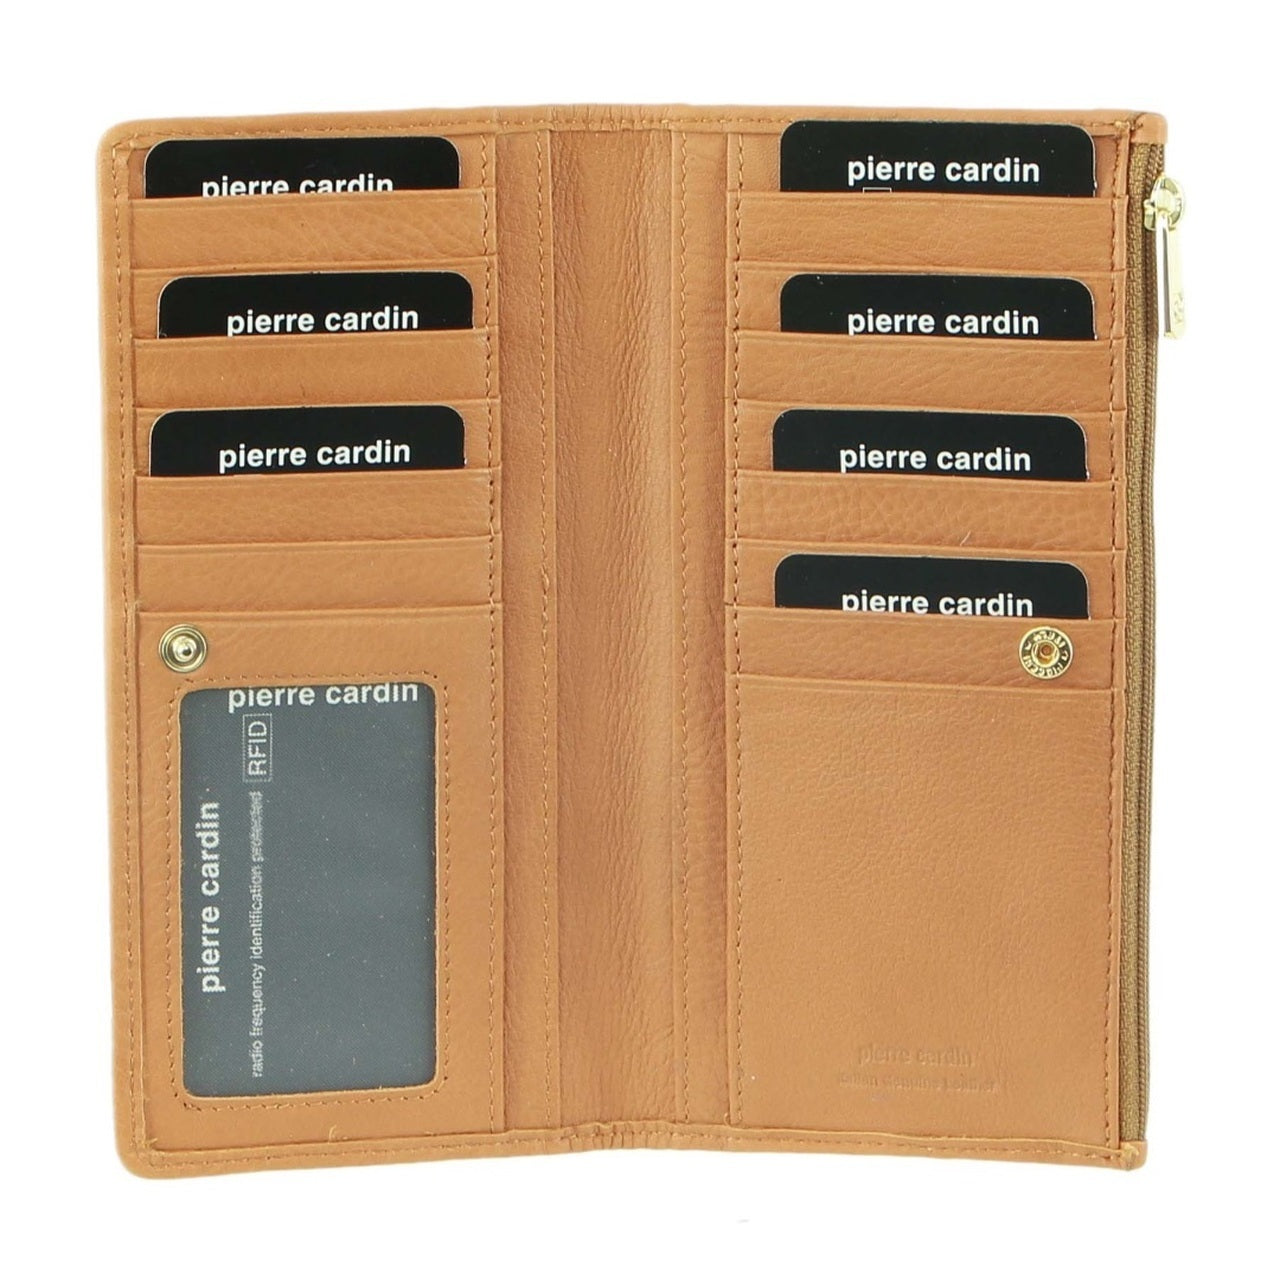 Pierre Cardin Womens Soft Italian Leather RFID Purse Wallet - Caramel - SILBERSHELL